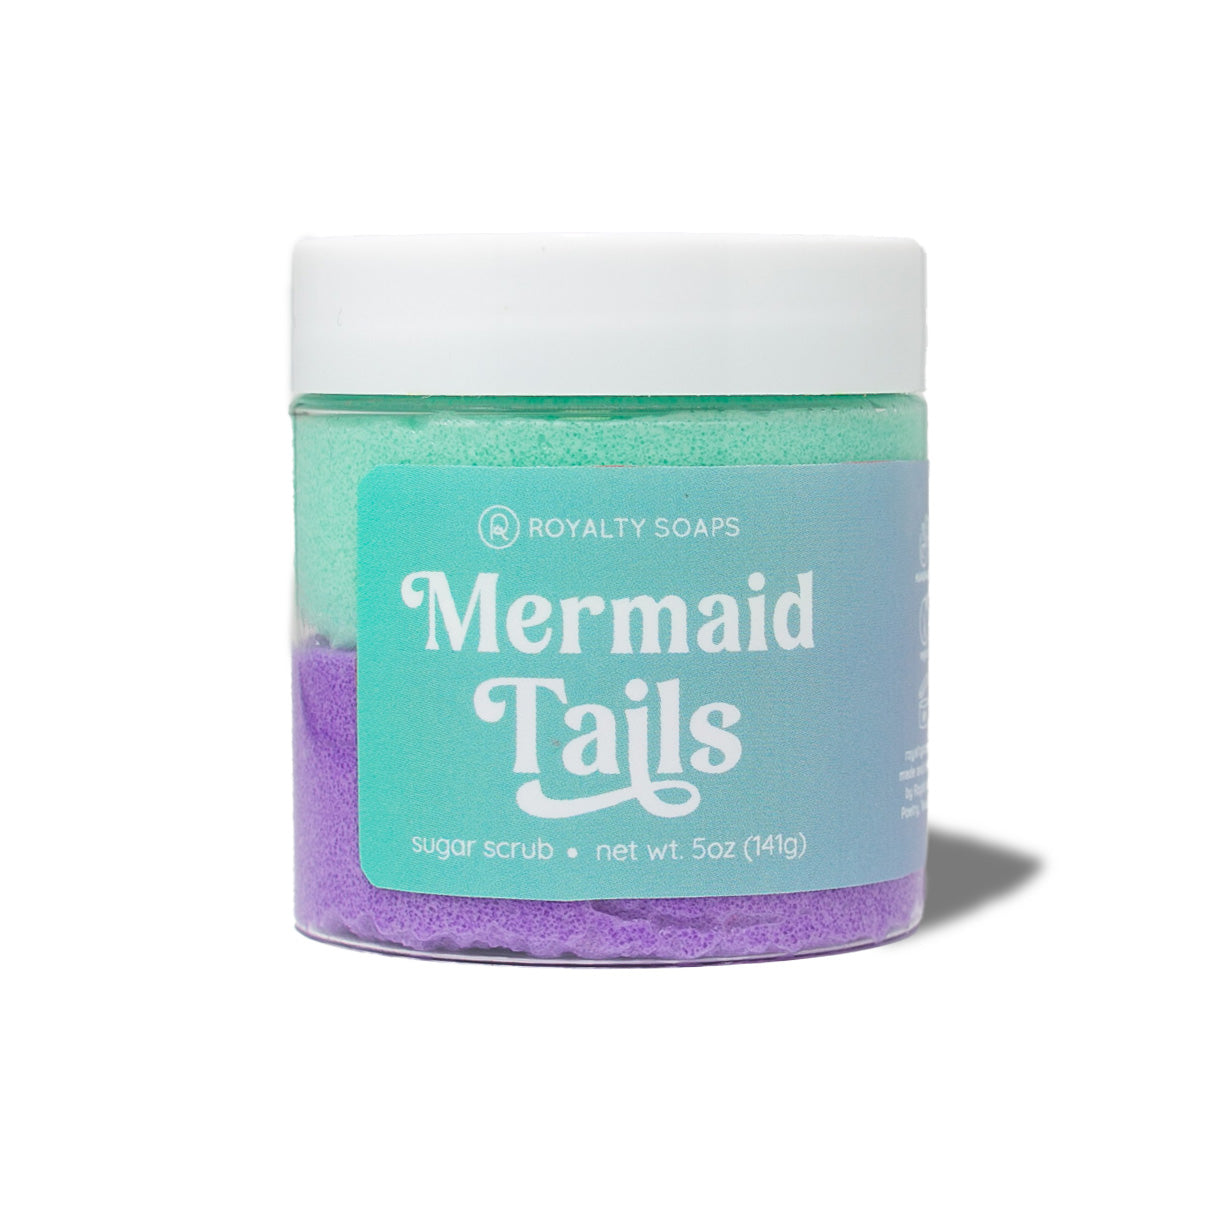 Mermaid Tails Sugar Scrub